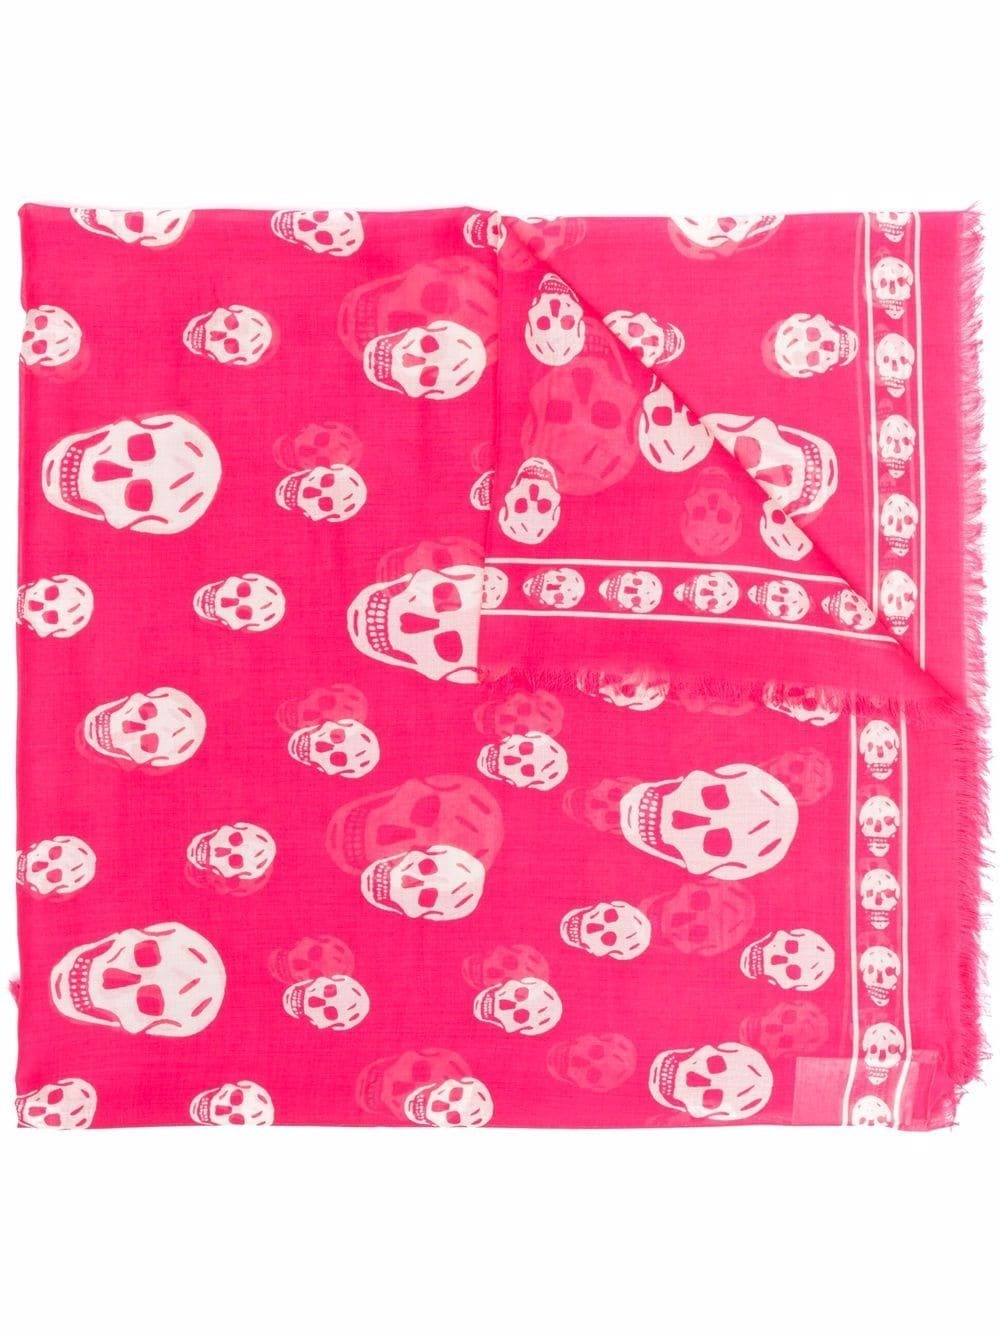 Schal mit Totenkopf-Print in Pink